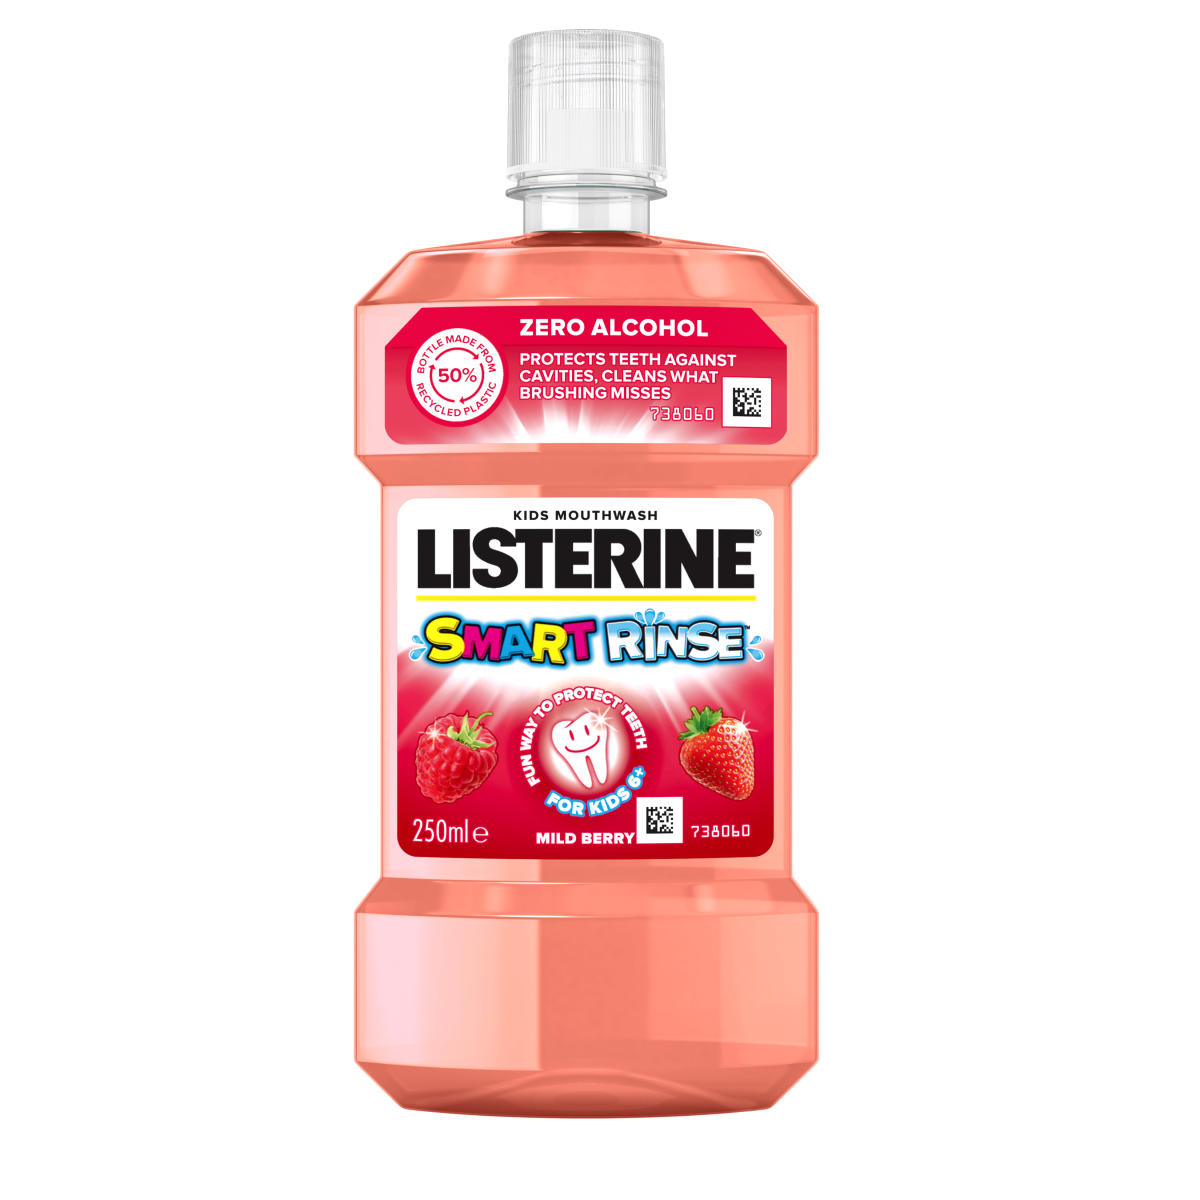 Listerine Smart Rinse Mild Mint 250ml For Kids 6+ termékfotó, Zero Alcohol és Protects teeth against cavities, cleans what brushing misses feliratokkal